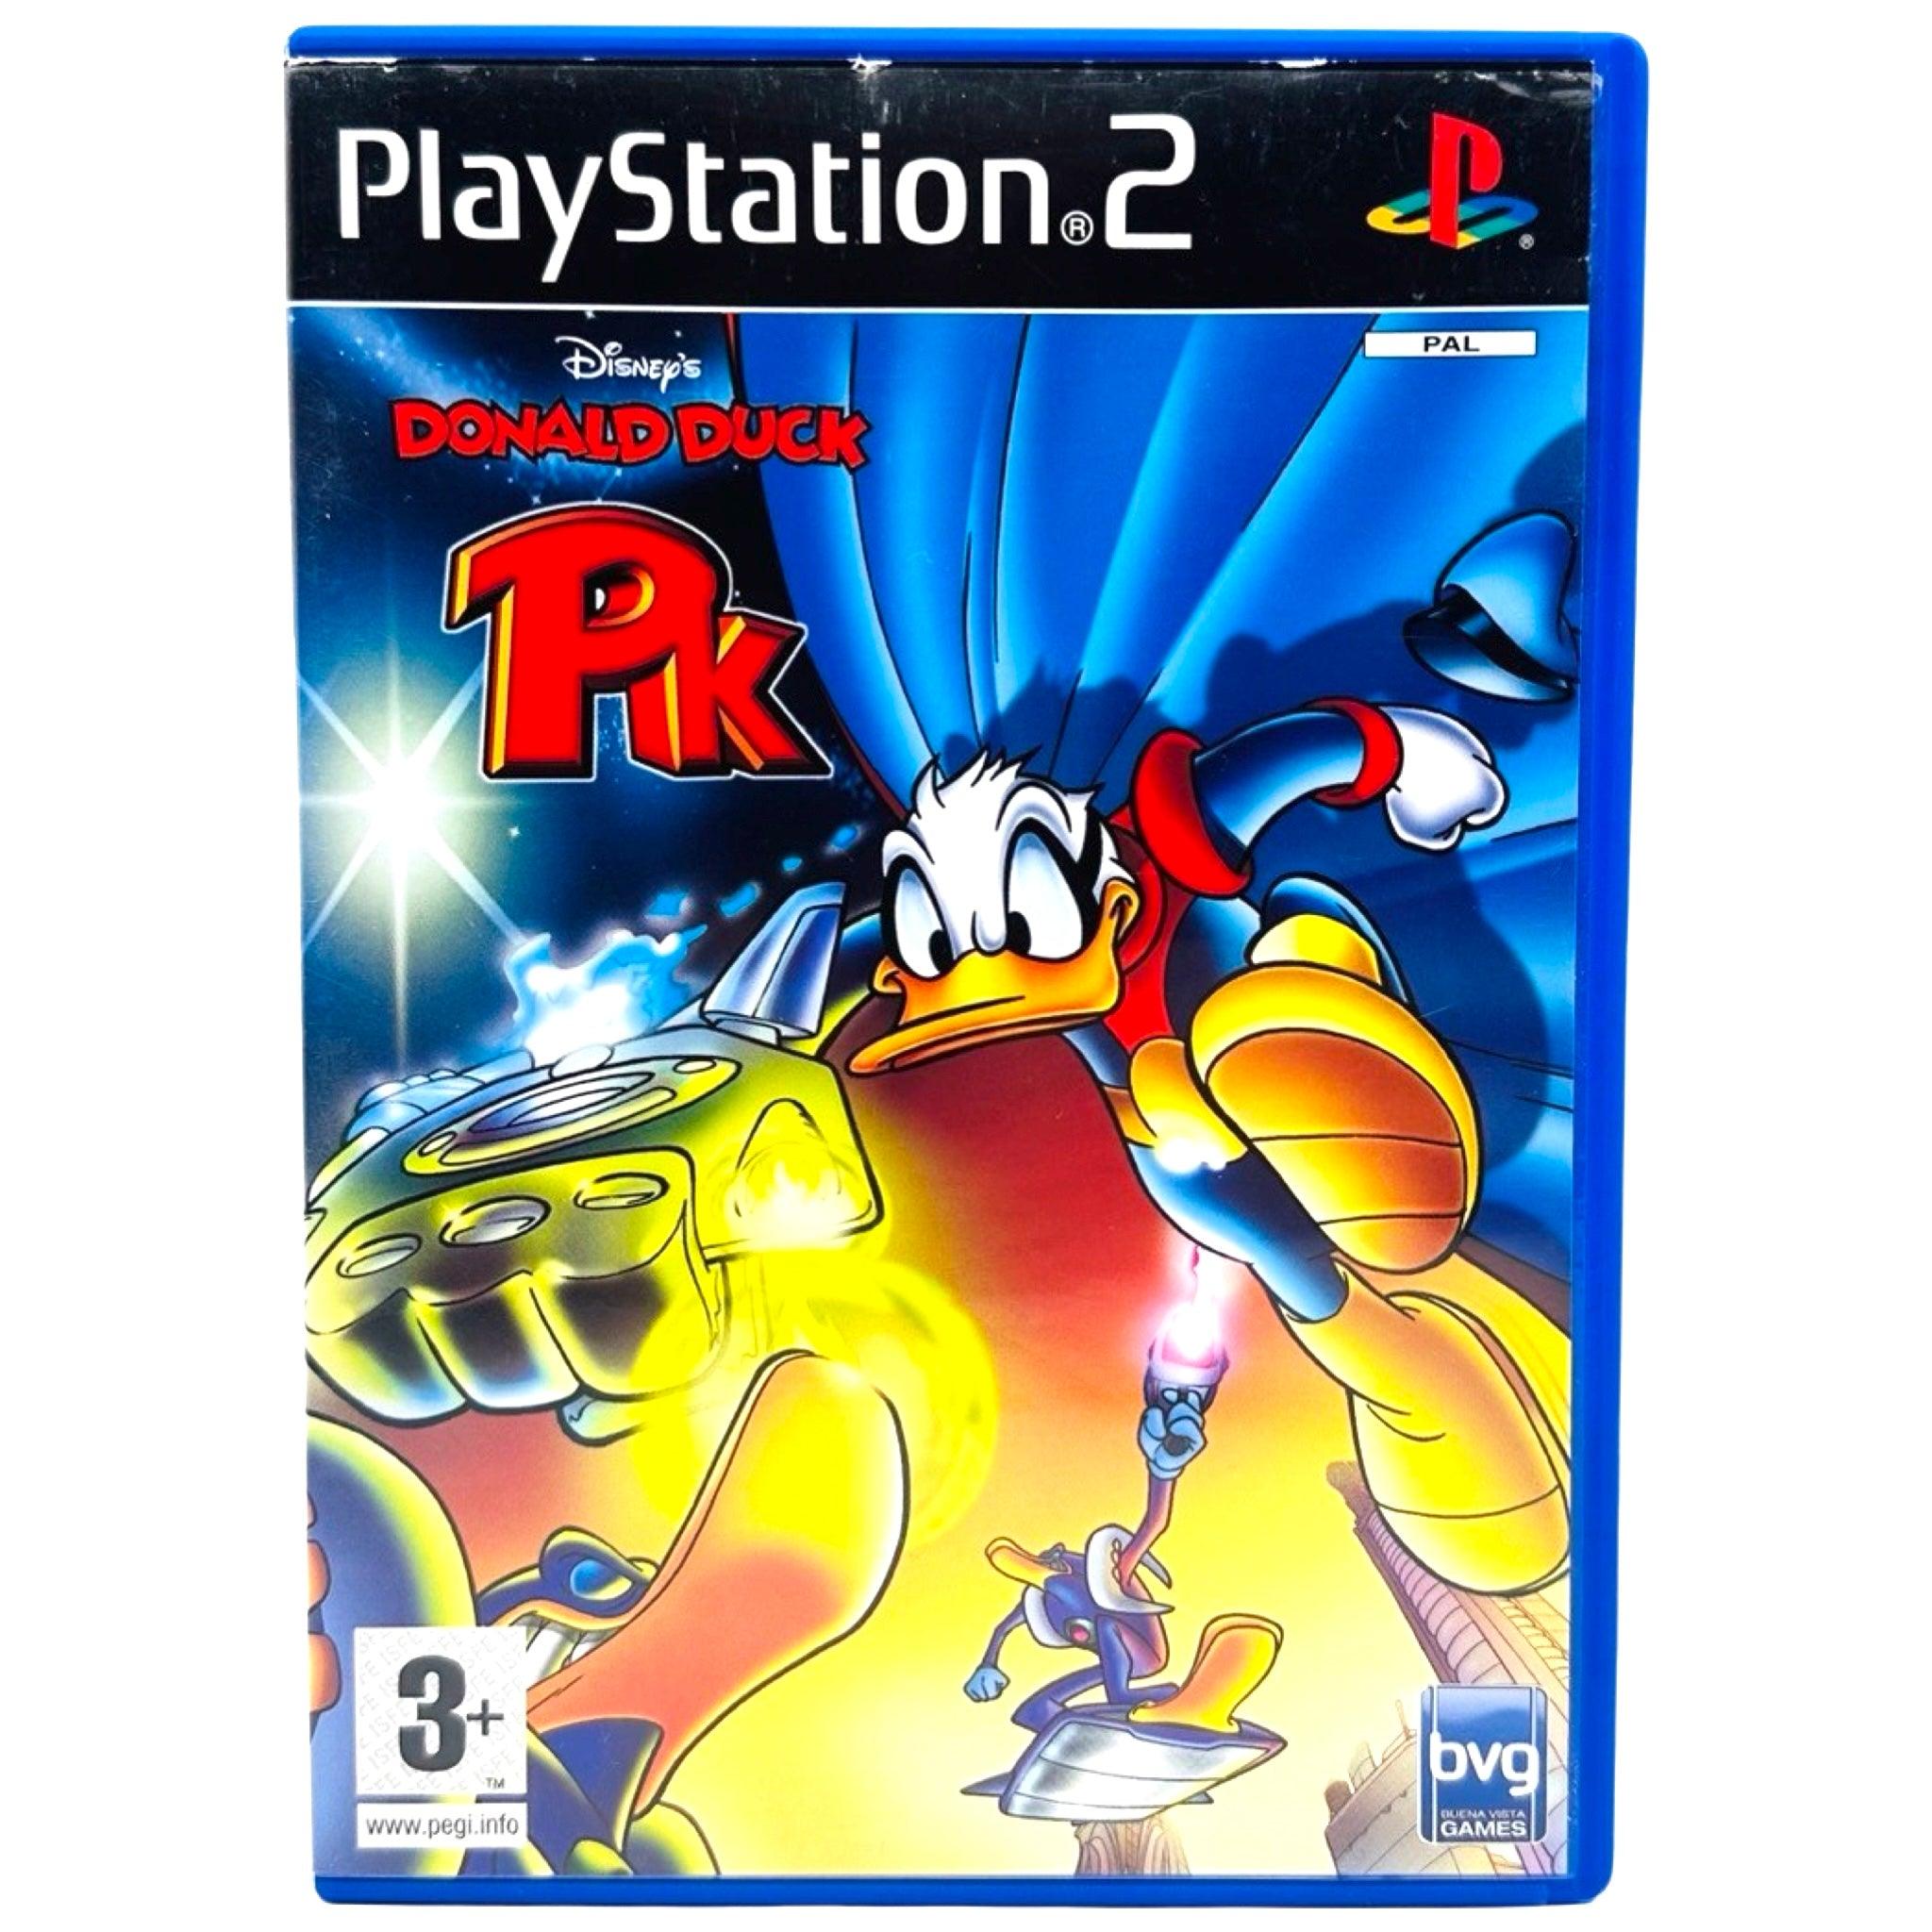 PS2: Disney's Donald Duck: PK - RetroGaming.no